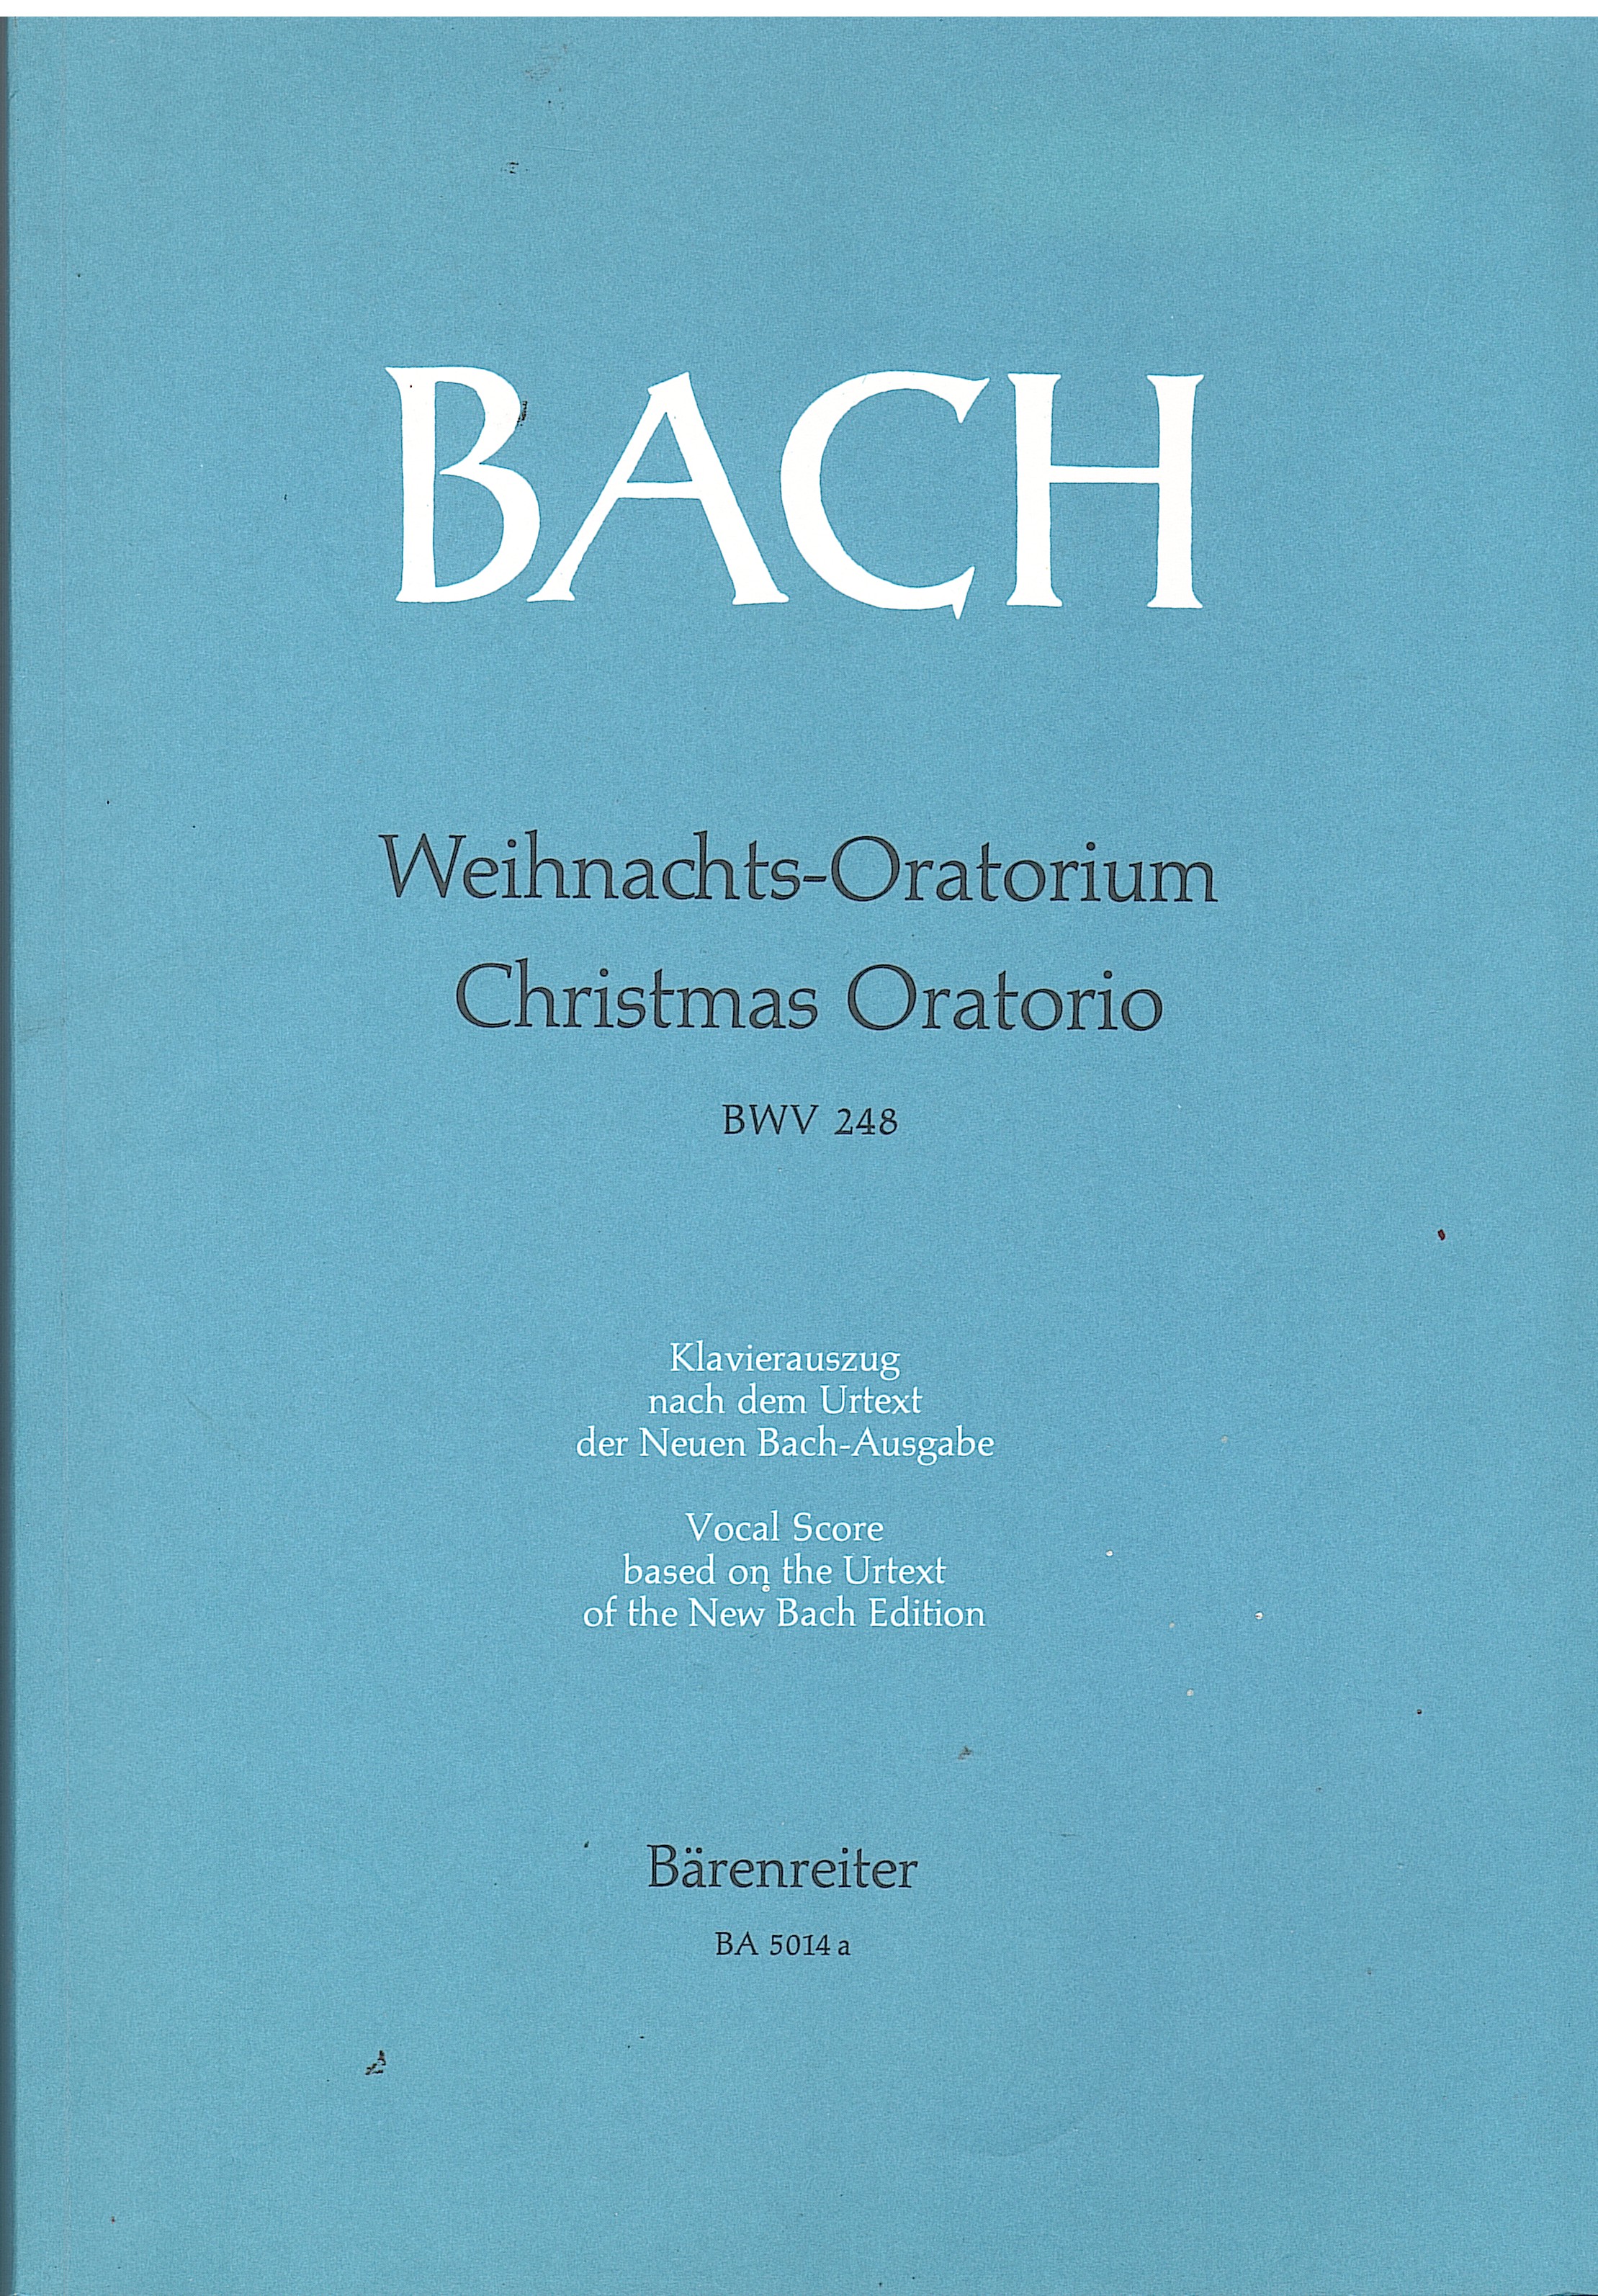 WEIHNACHTS-ORATORIUM. CHRISTMAS ORATORIO BWV 248